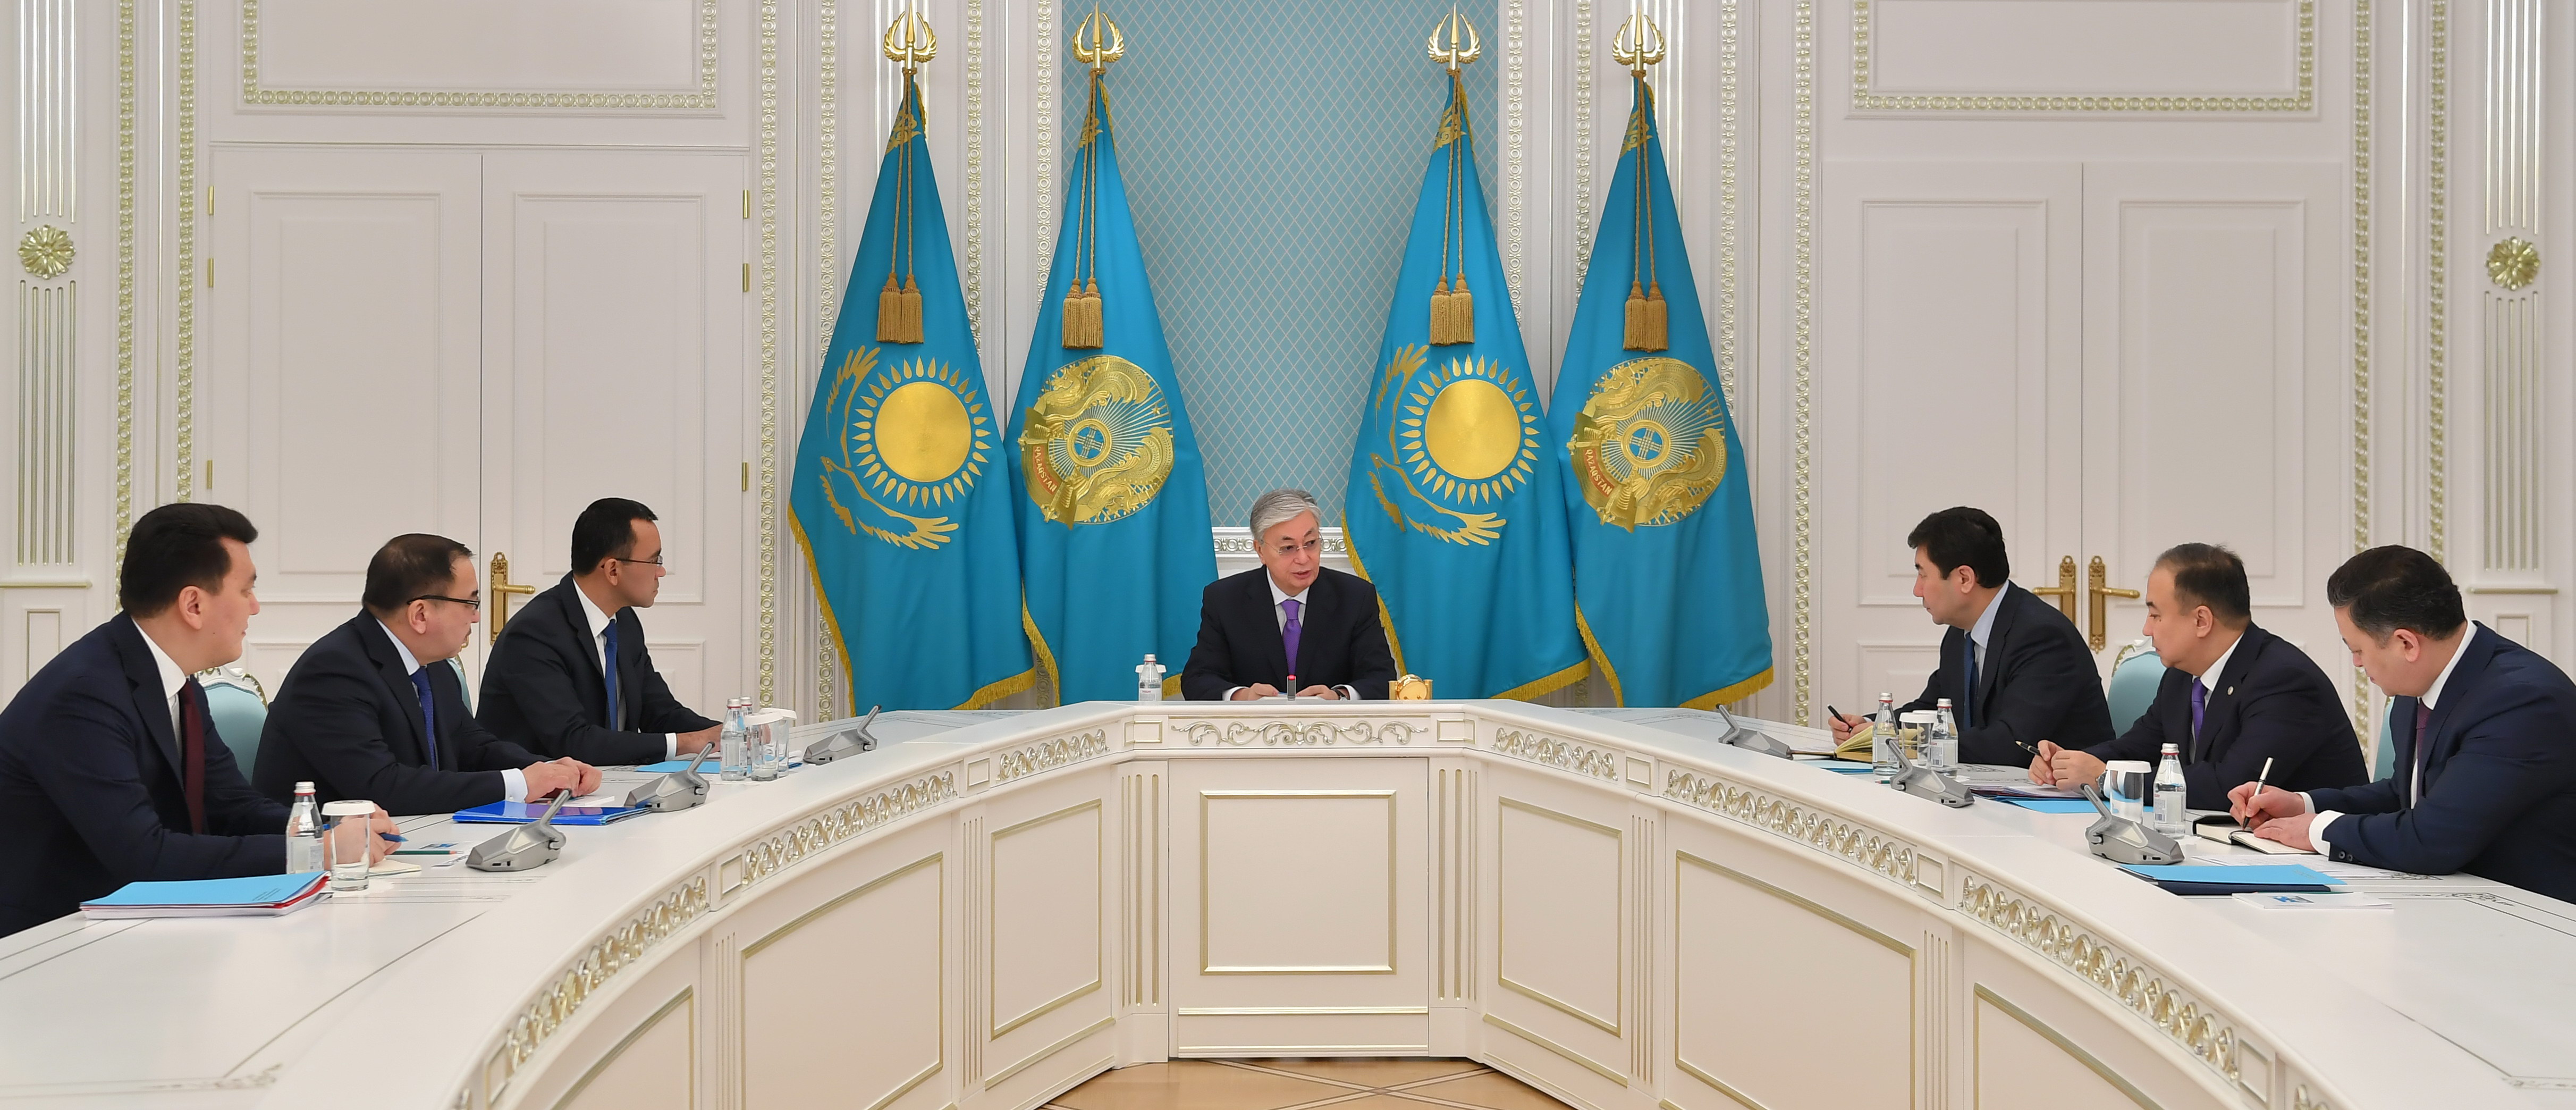 Саяси элита. Администрация президента Республики Казахстан. Зам президента Казахстана. Токаев совещание.